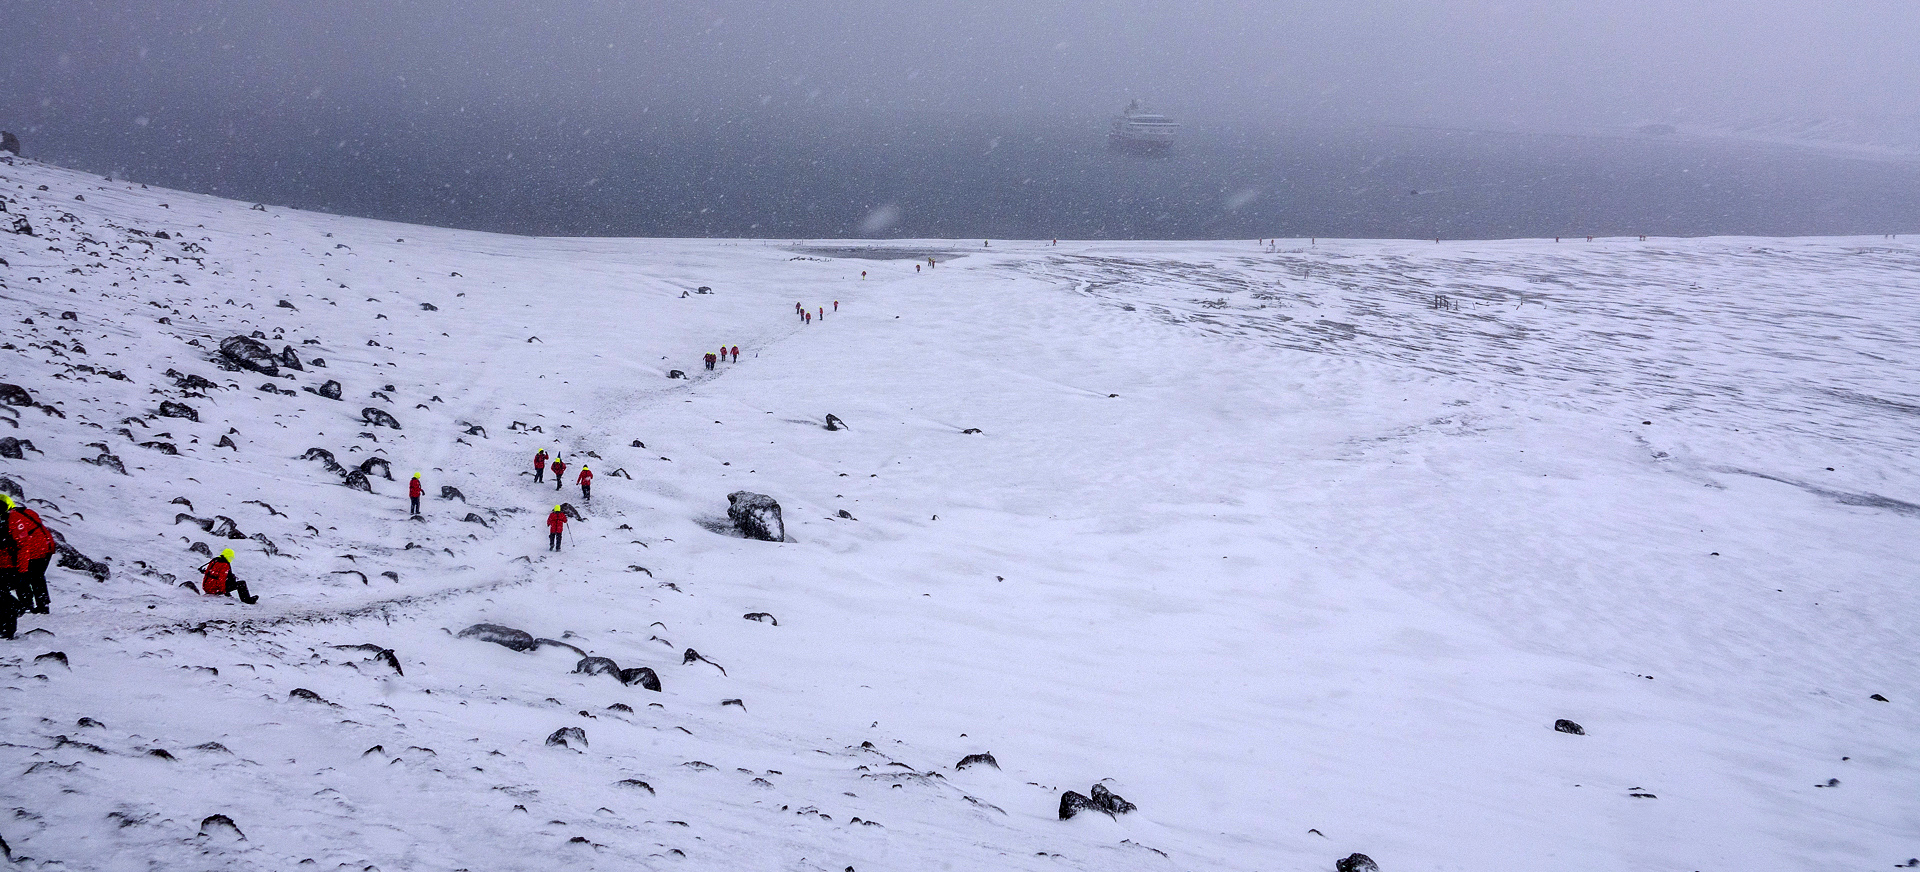 Final Destination Antarctica – Deception Island